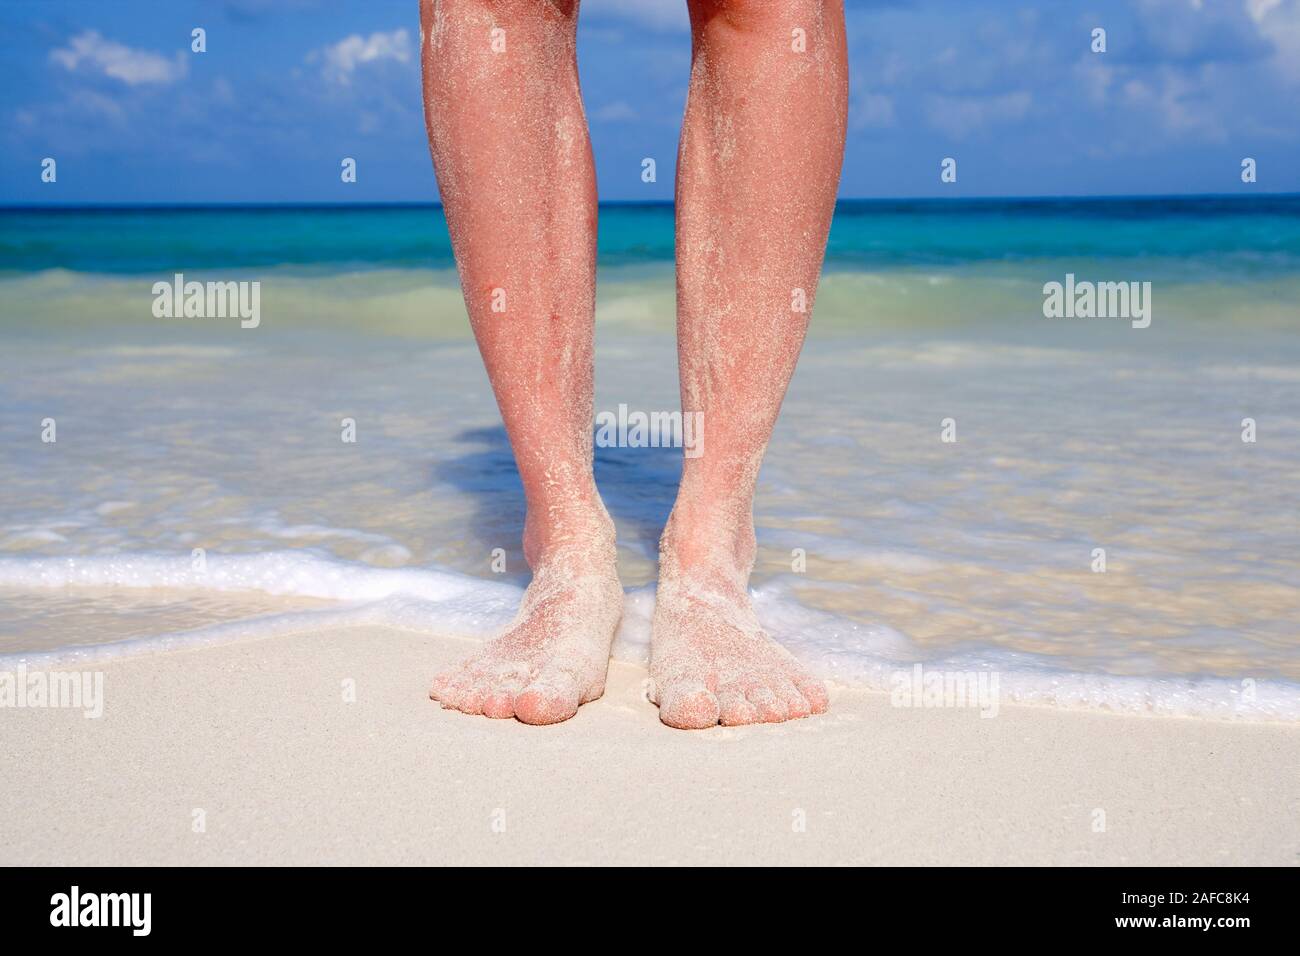 Womans Füße mit Sand am tropischen Strand in Playa del Carmen, Mexiko Model Released Foto abgedeckt Stockfoto